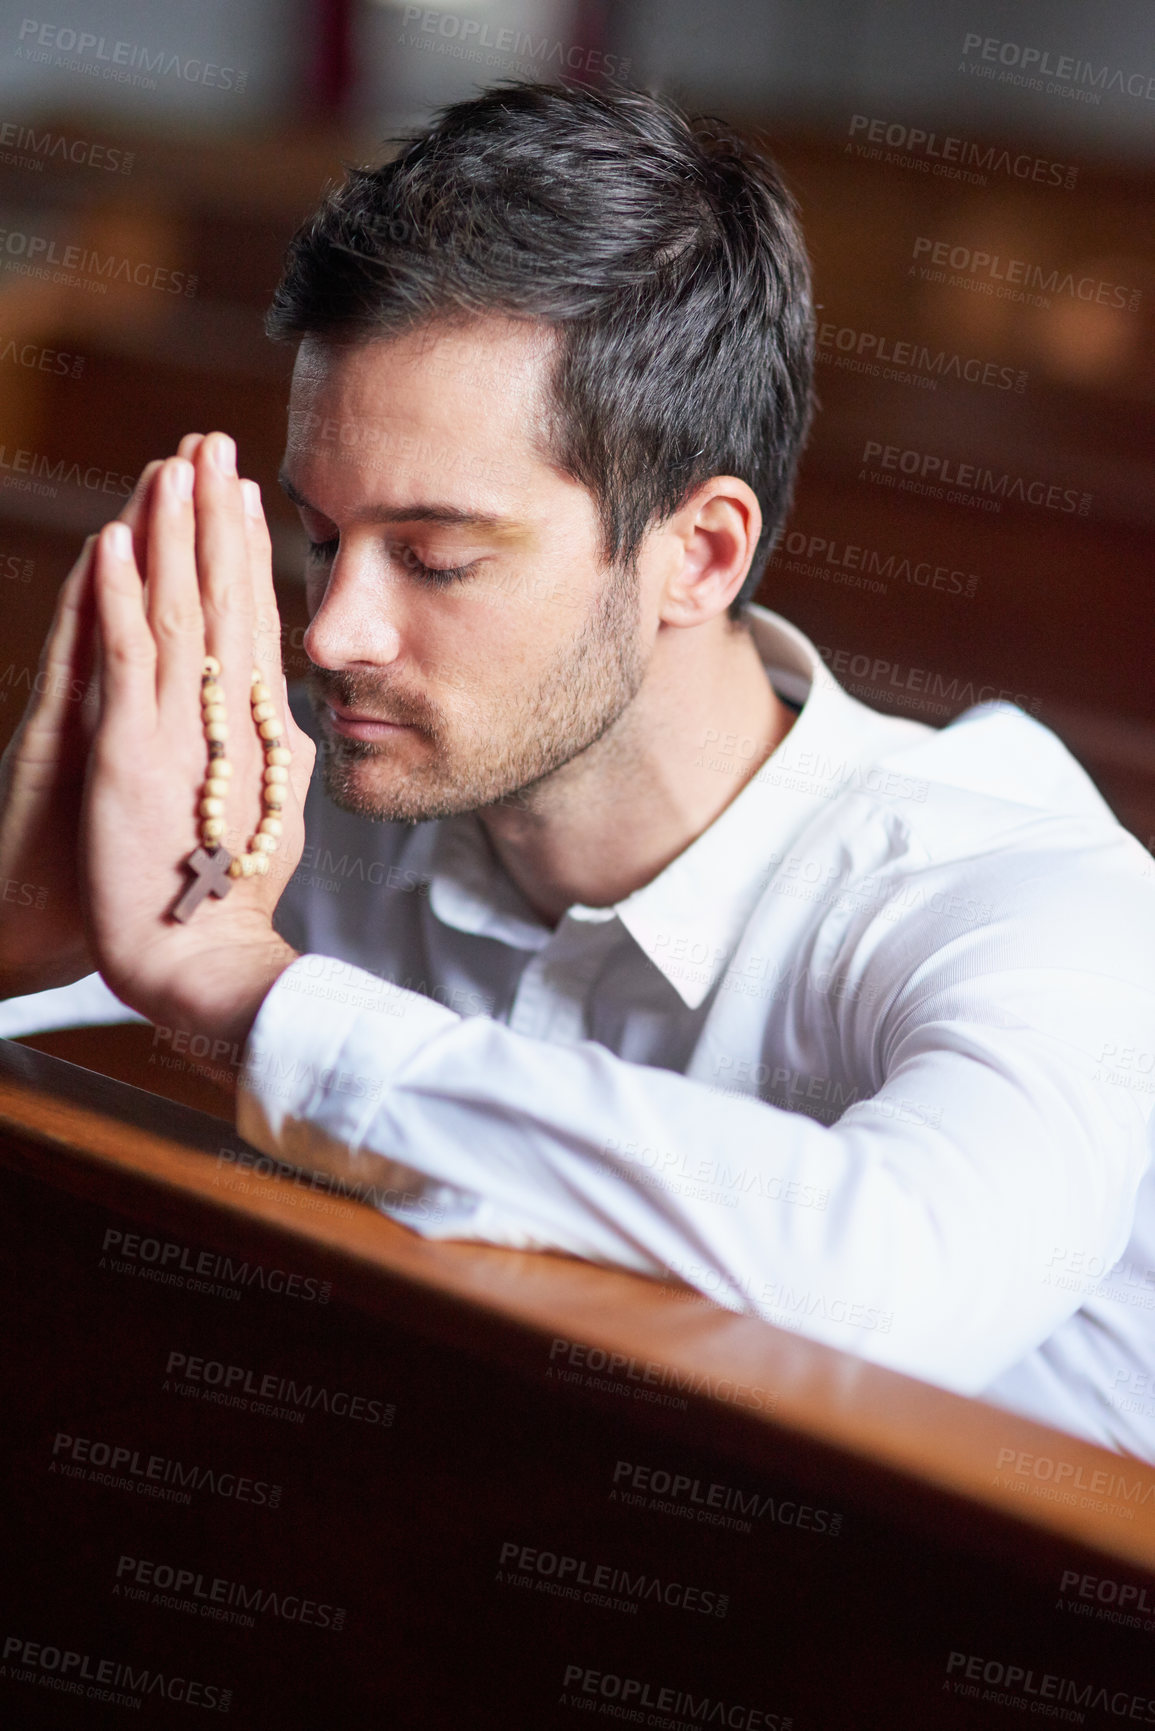 Buy stock photo Shot of a young man praying in a church